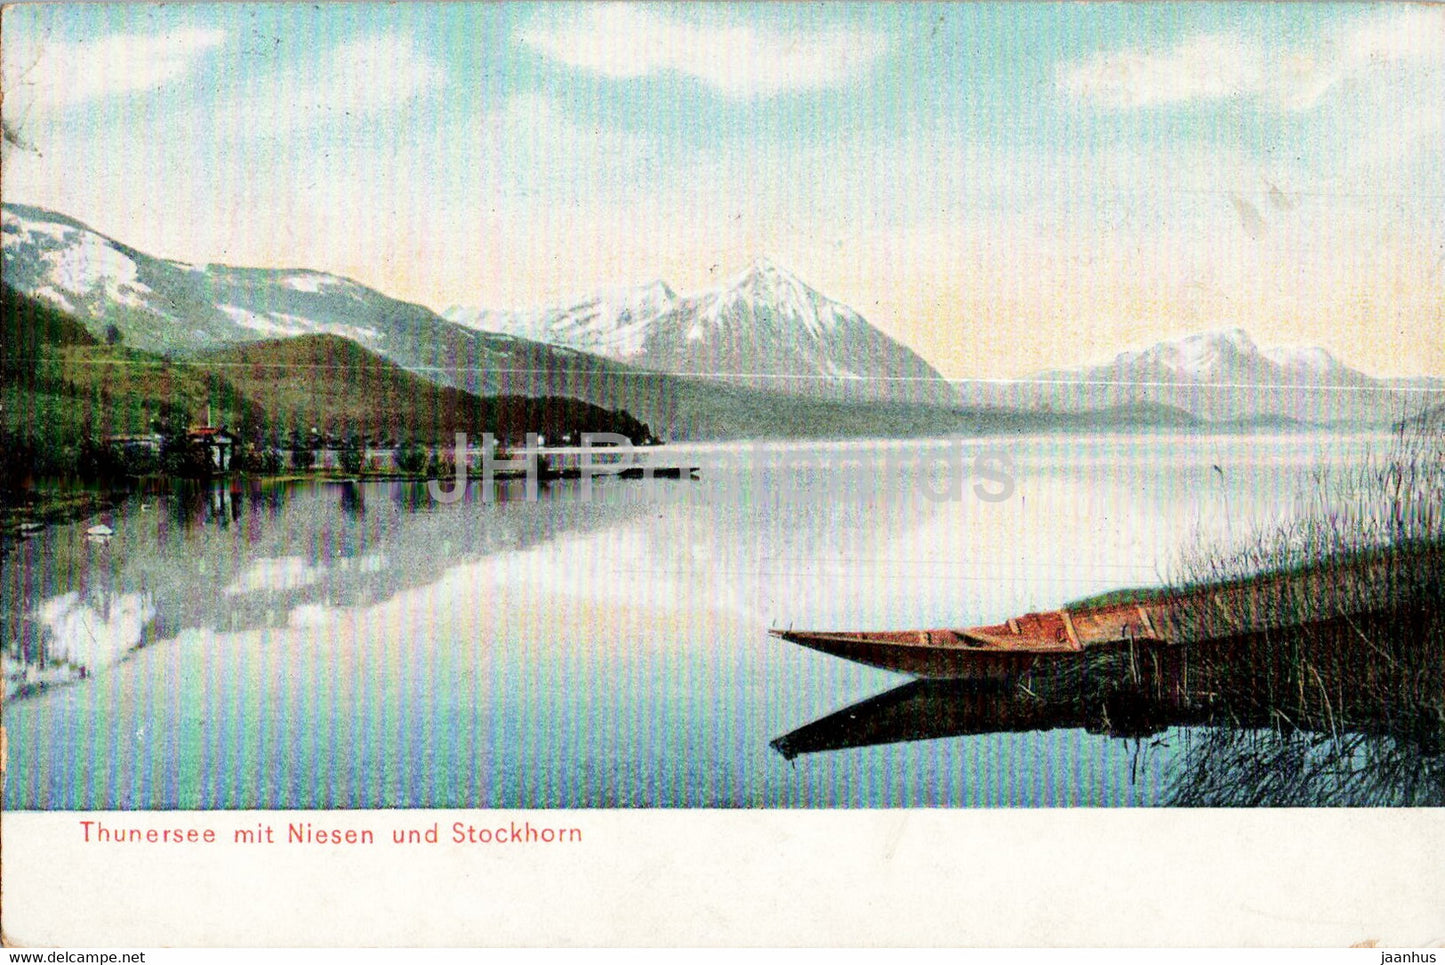 Thunersee mit Niesen und Stockhorn - boat - old postcard - Switzerland - used - JH Postcards